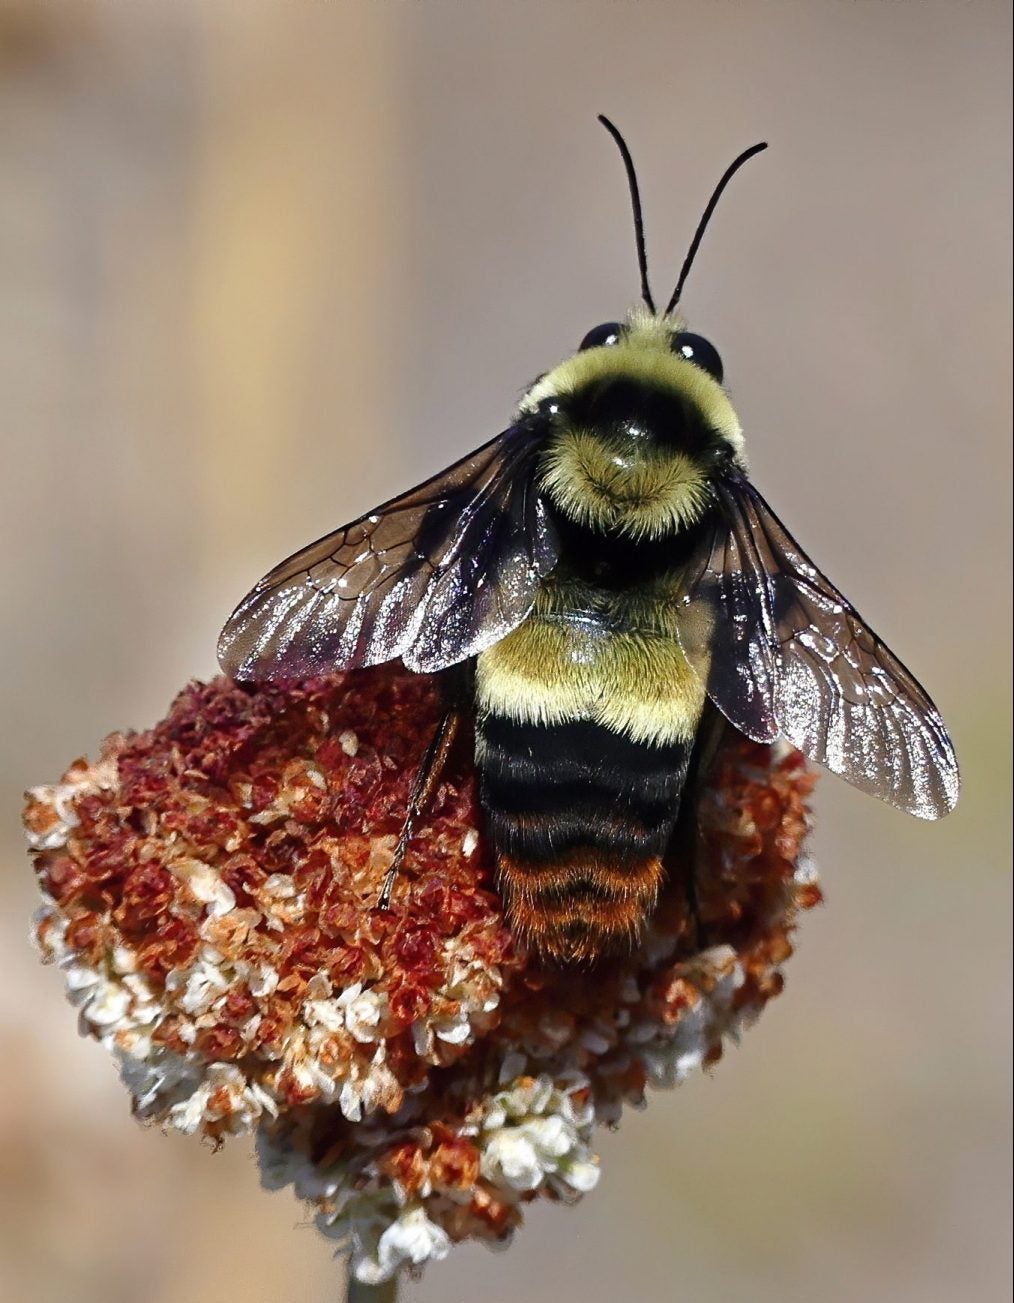 Crotch bumble bee. Image by bdog via iNaturalist.